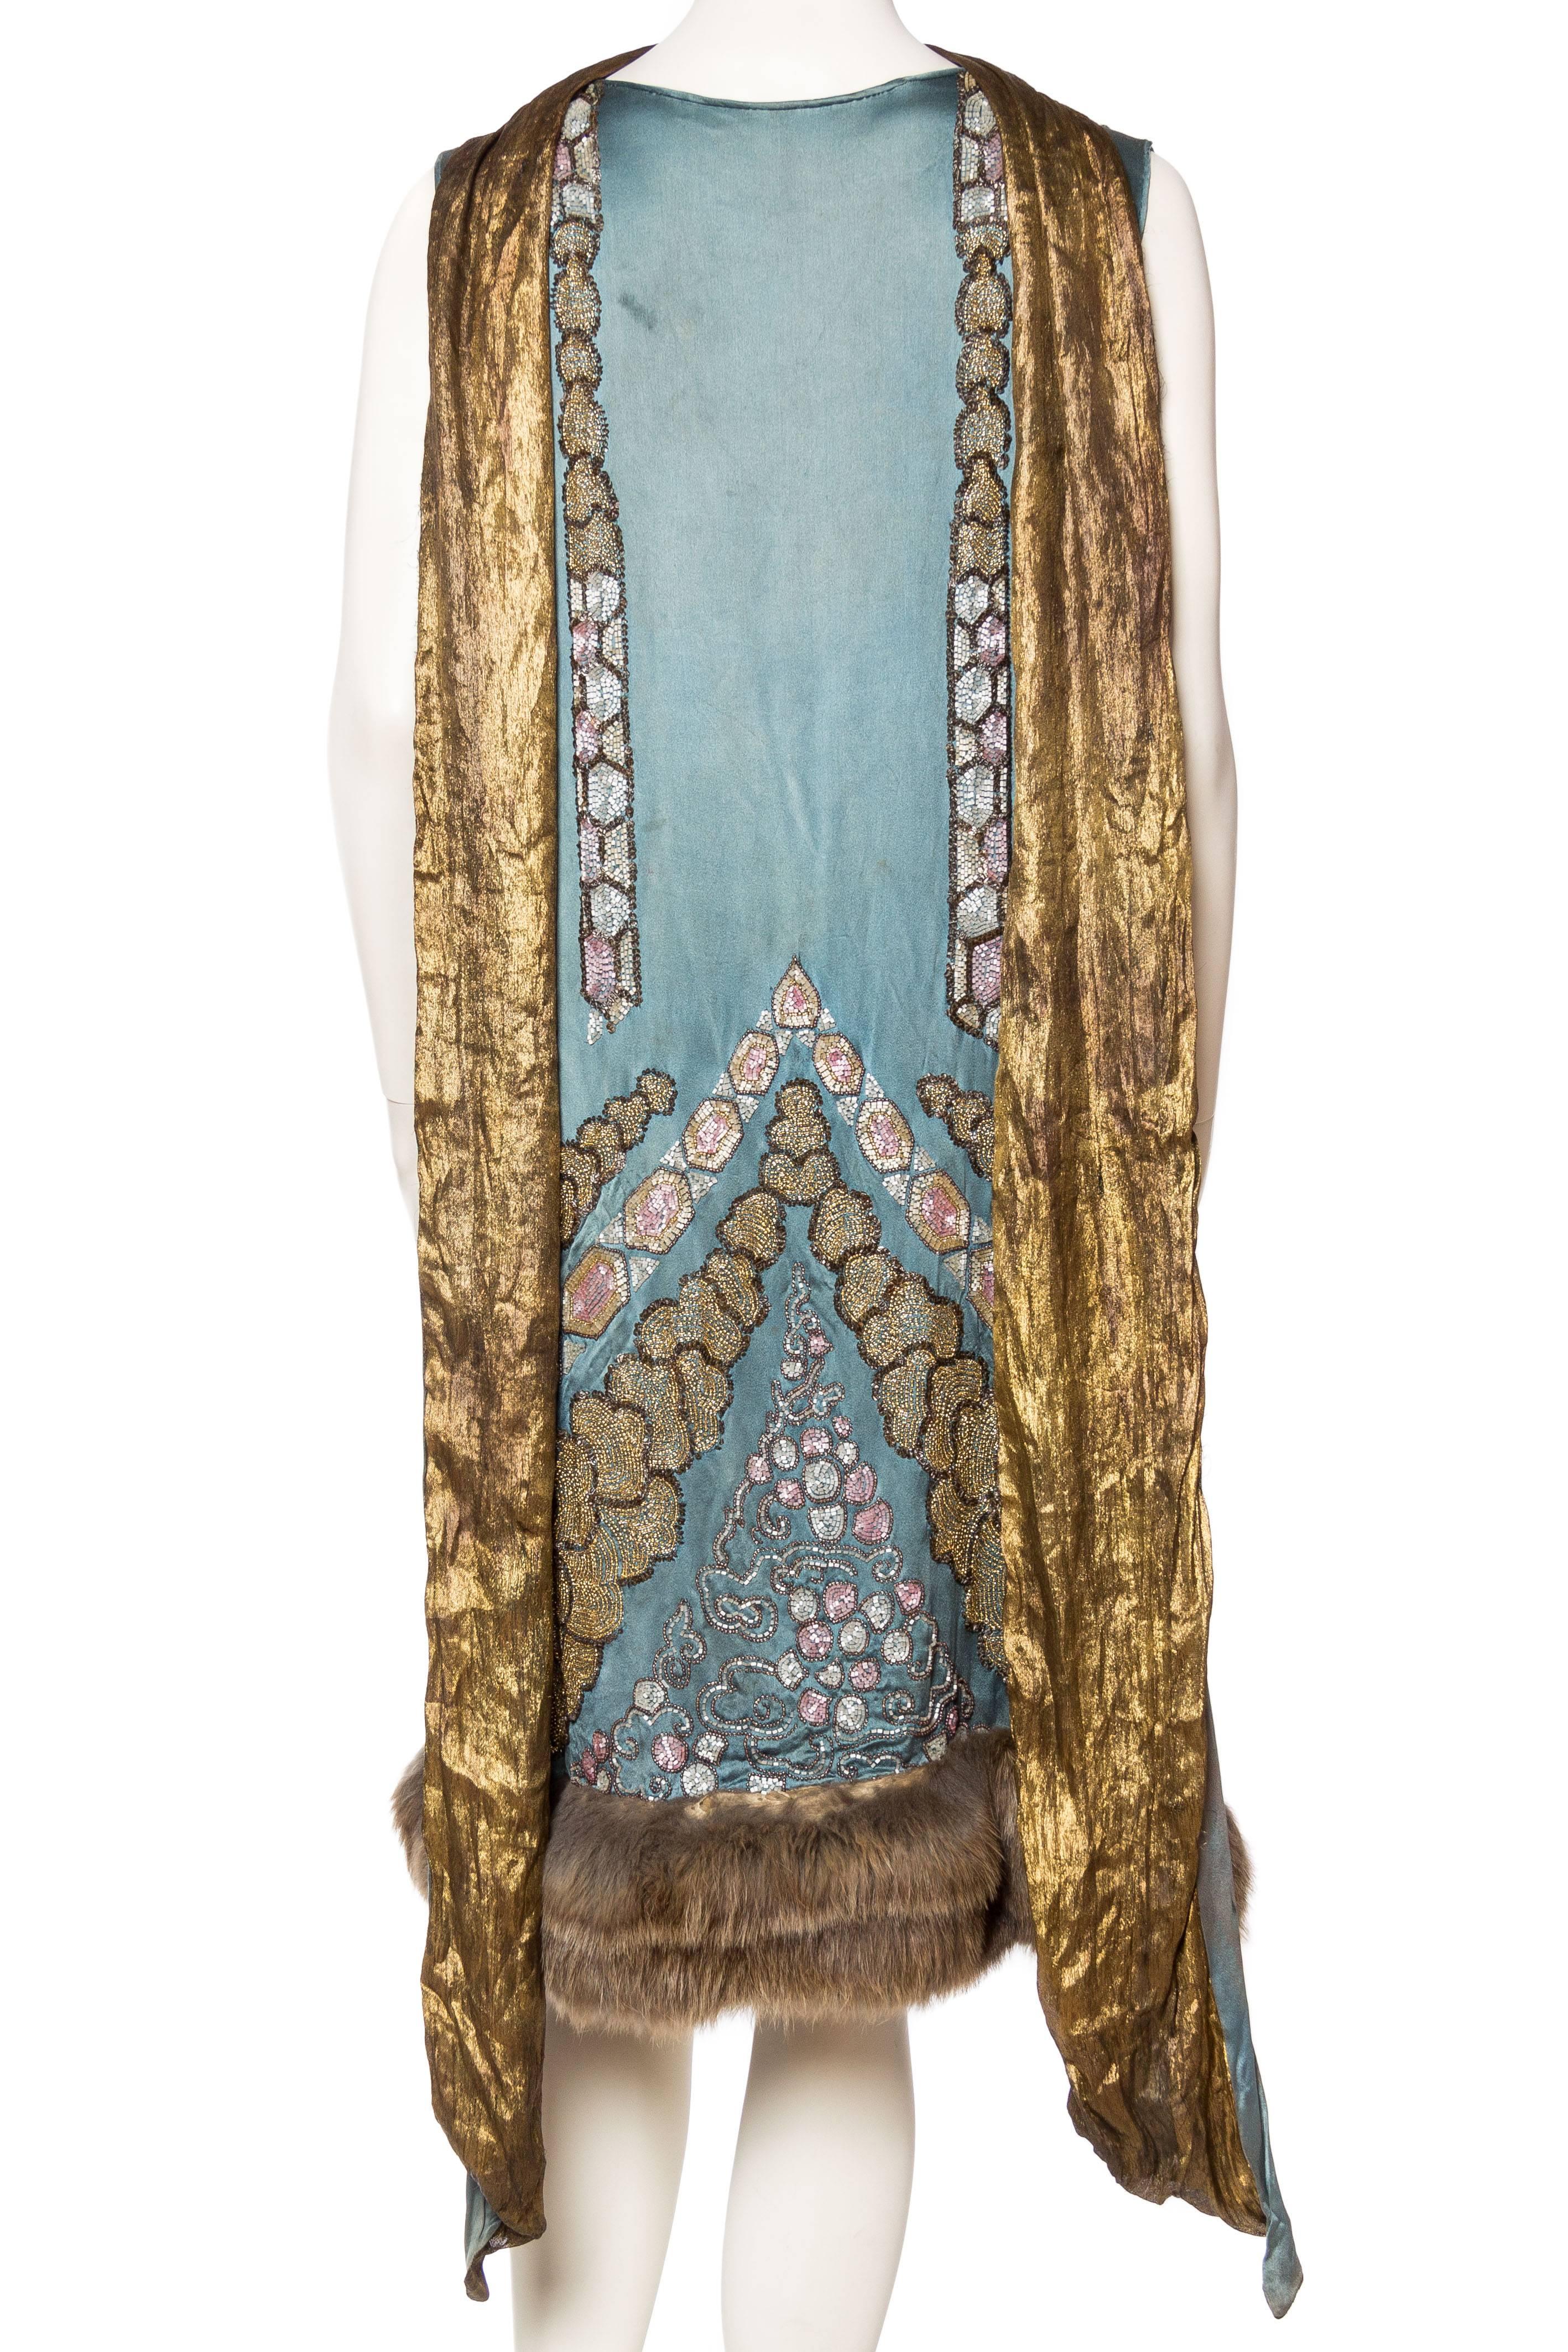 1920s Beaded Dress with Fur Hem and Lamé shawl 2